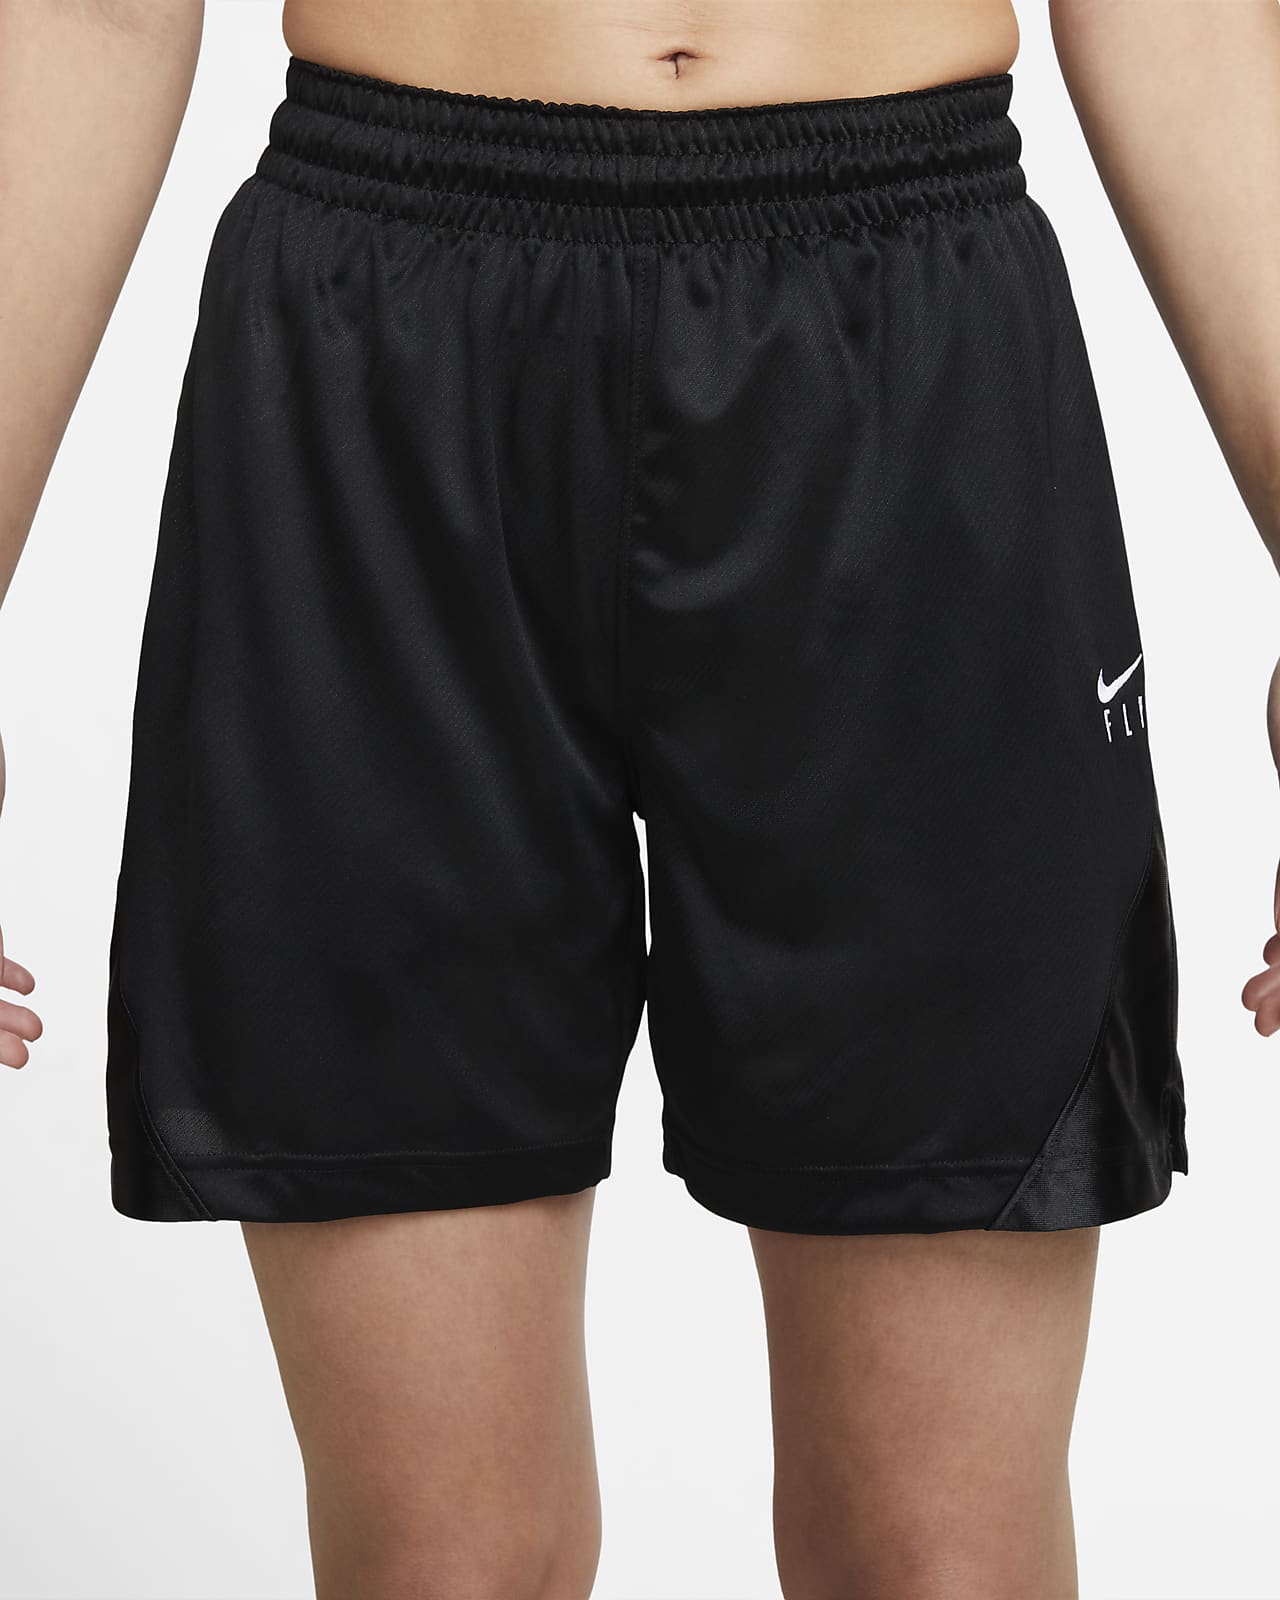 nike women's dri fit basketball shorts